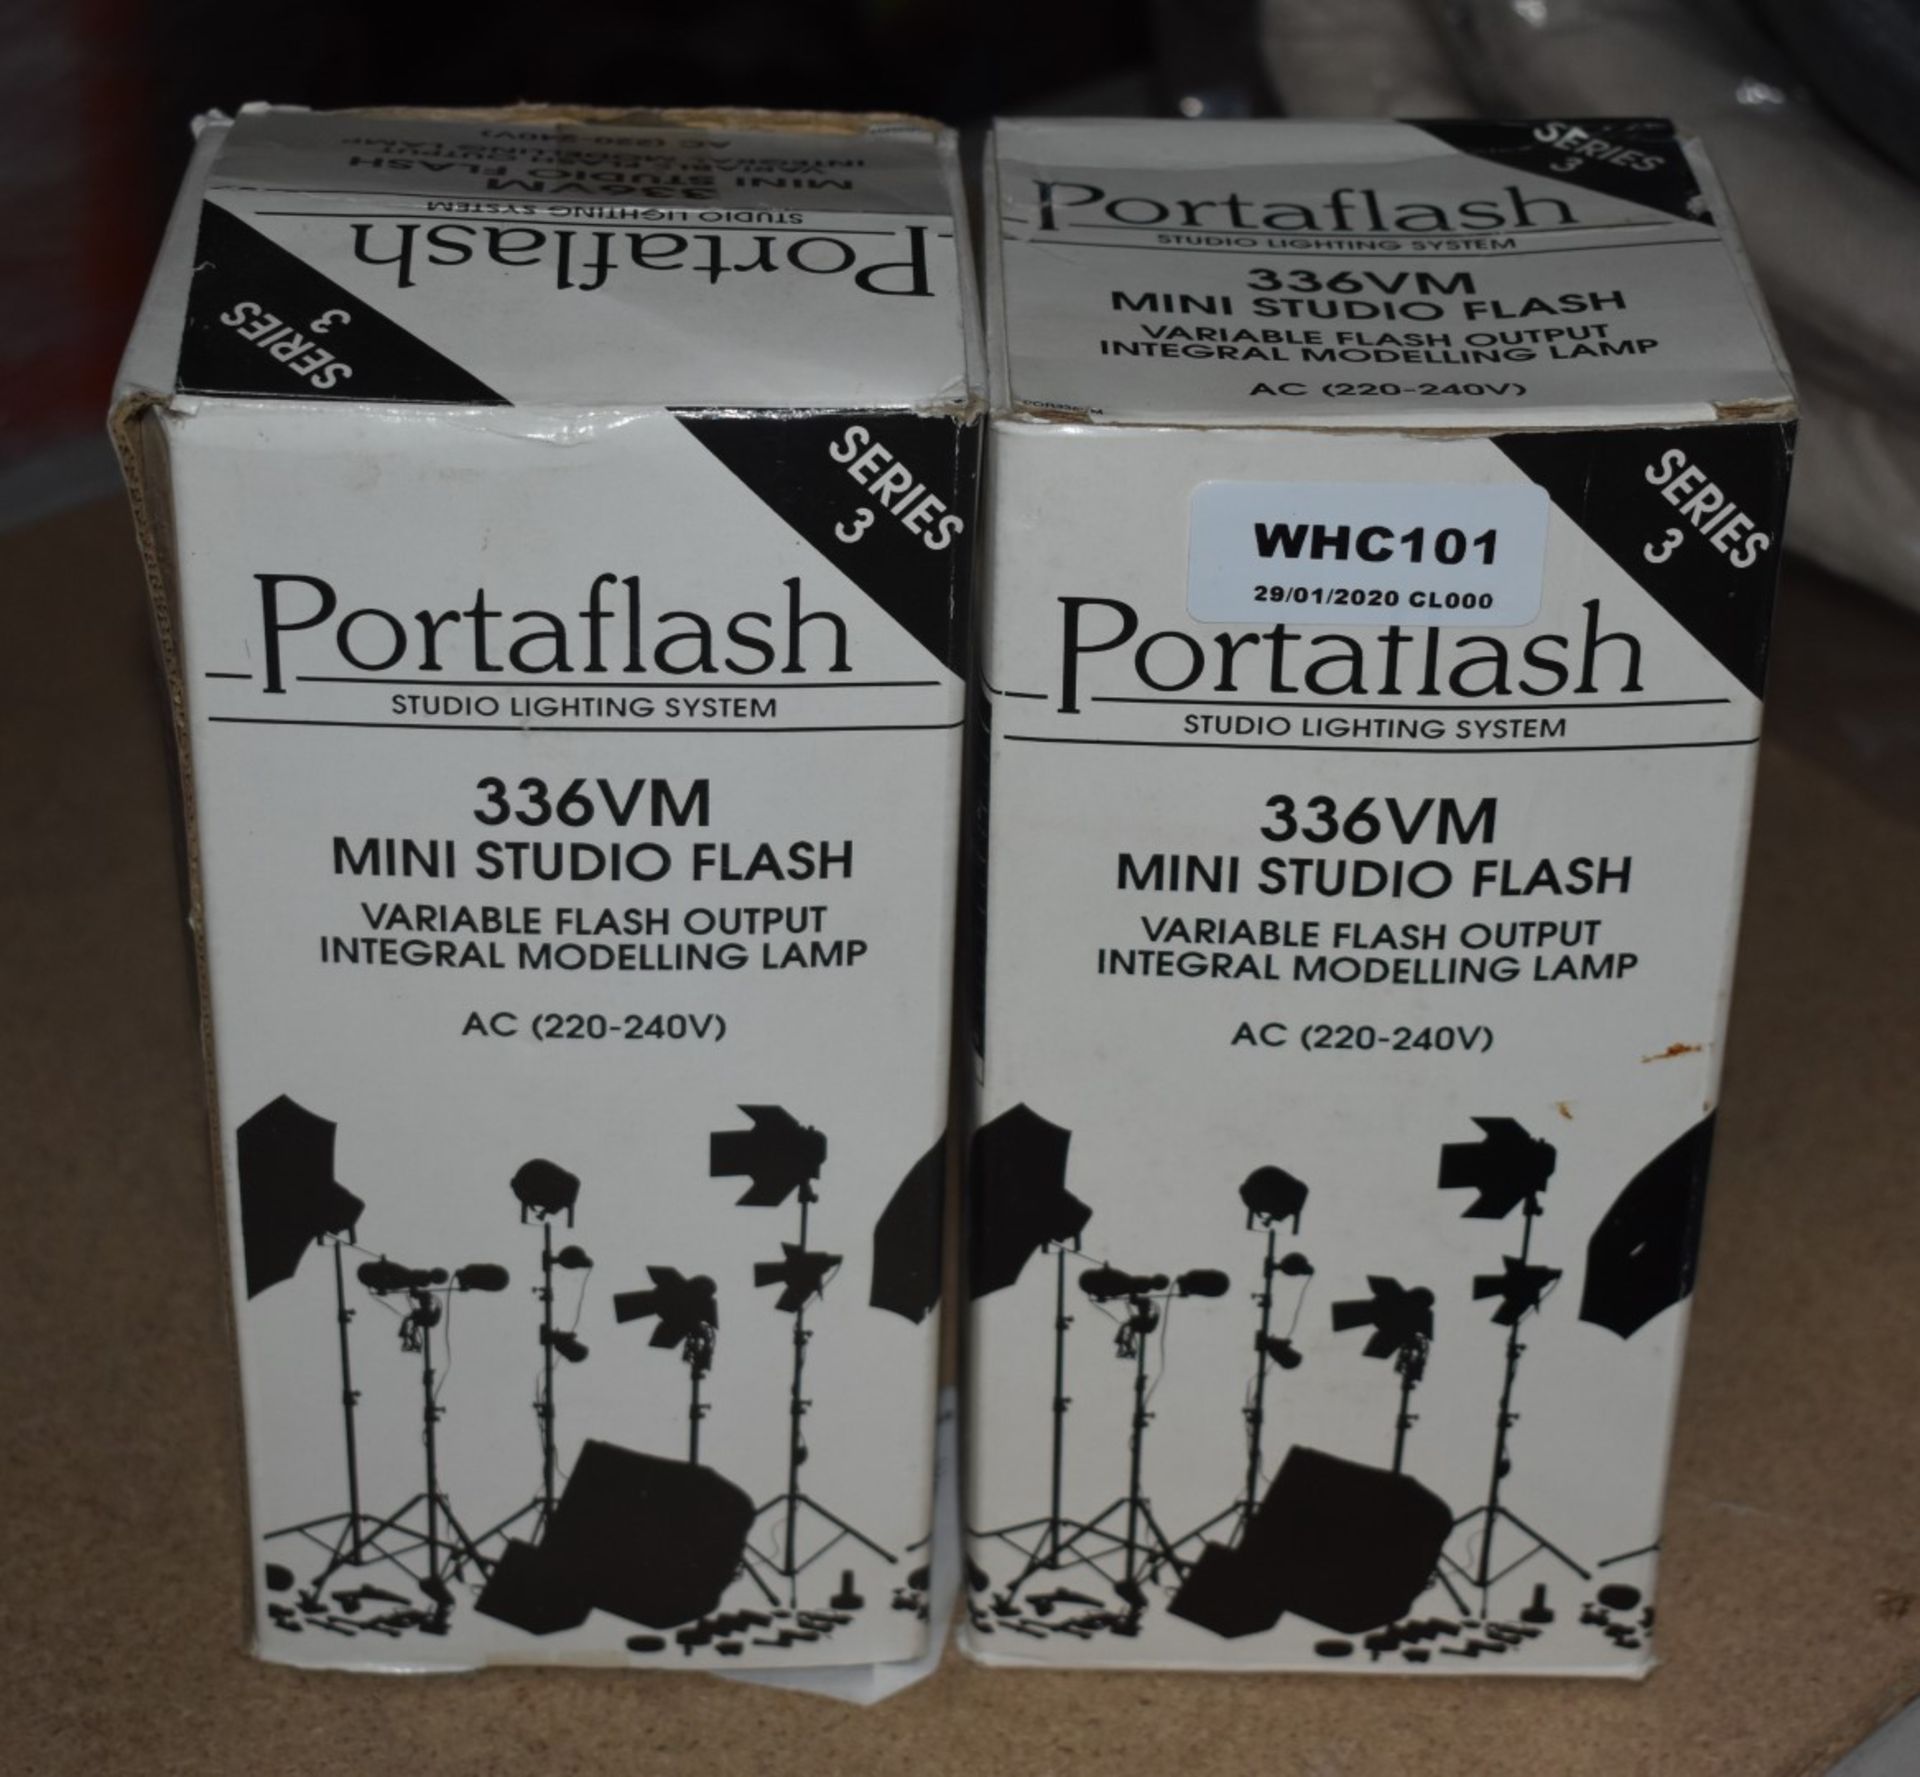 2 x Portaflash 336VM Mini Studio Flash Lights For Photography - Boxed in Good Condition - Ref WHC101